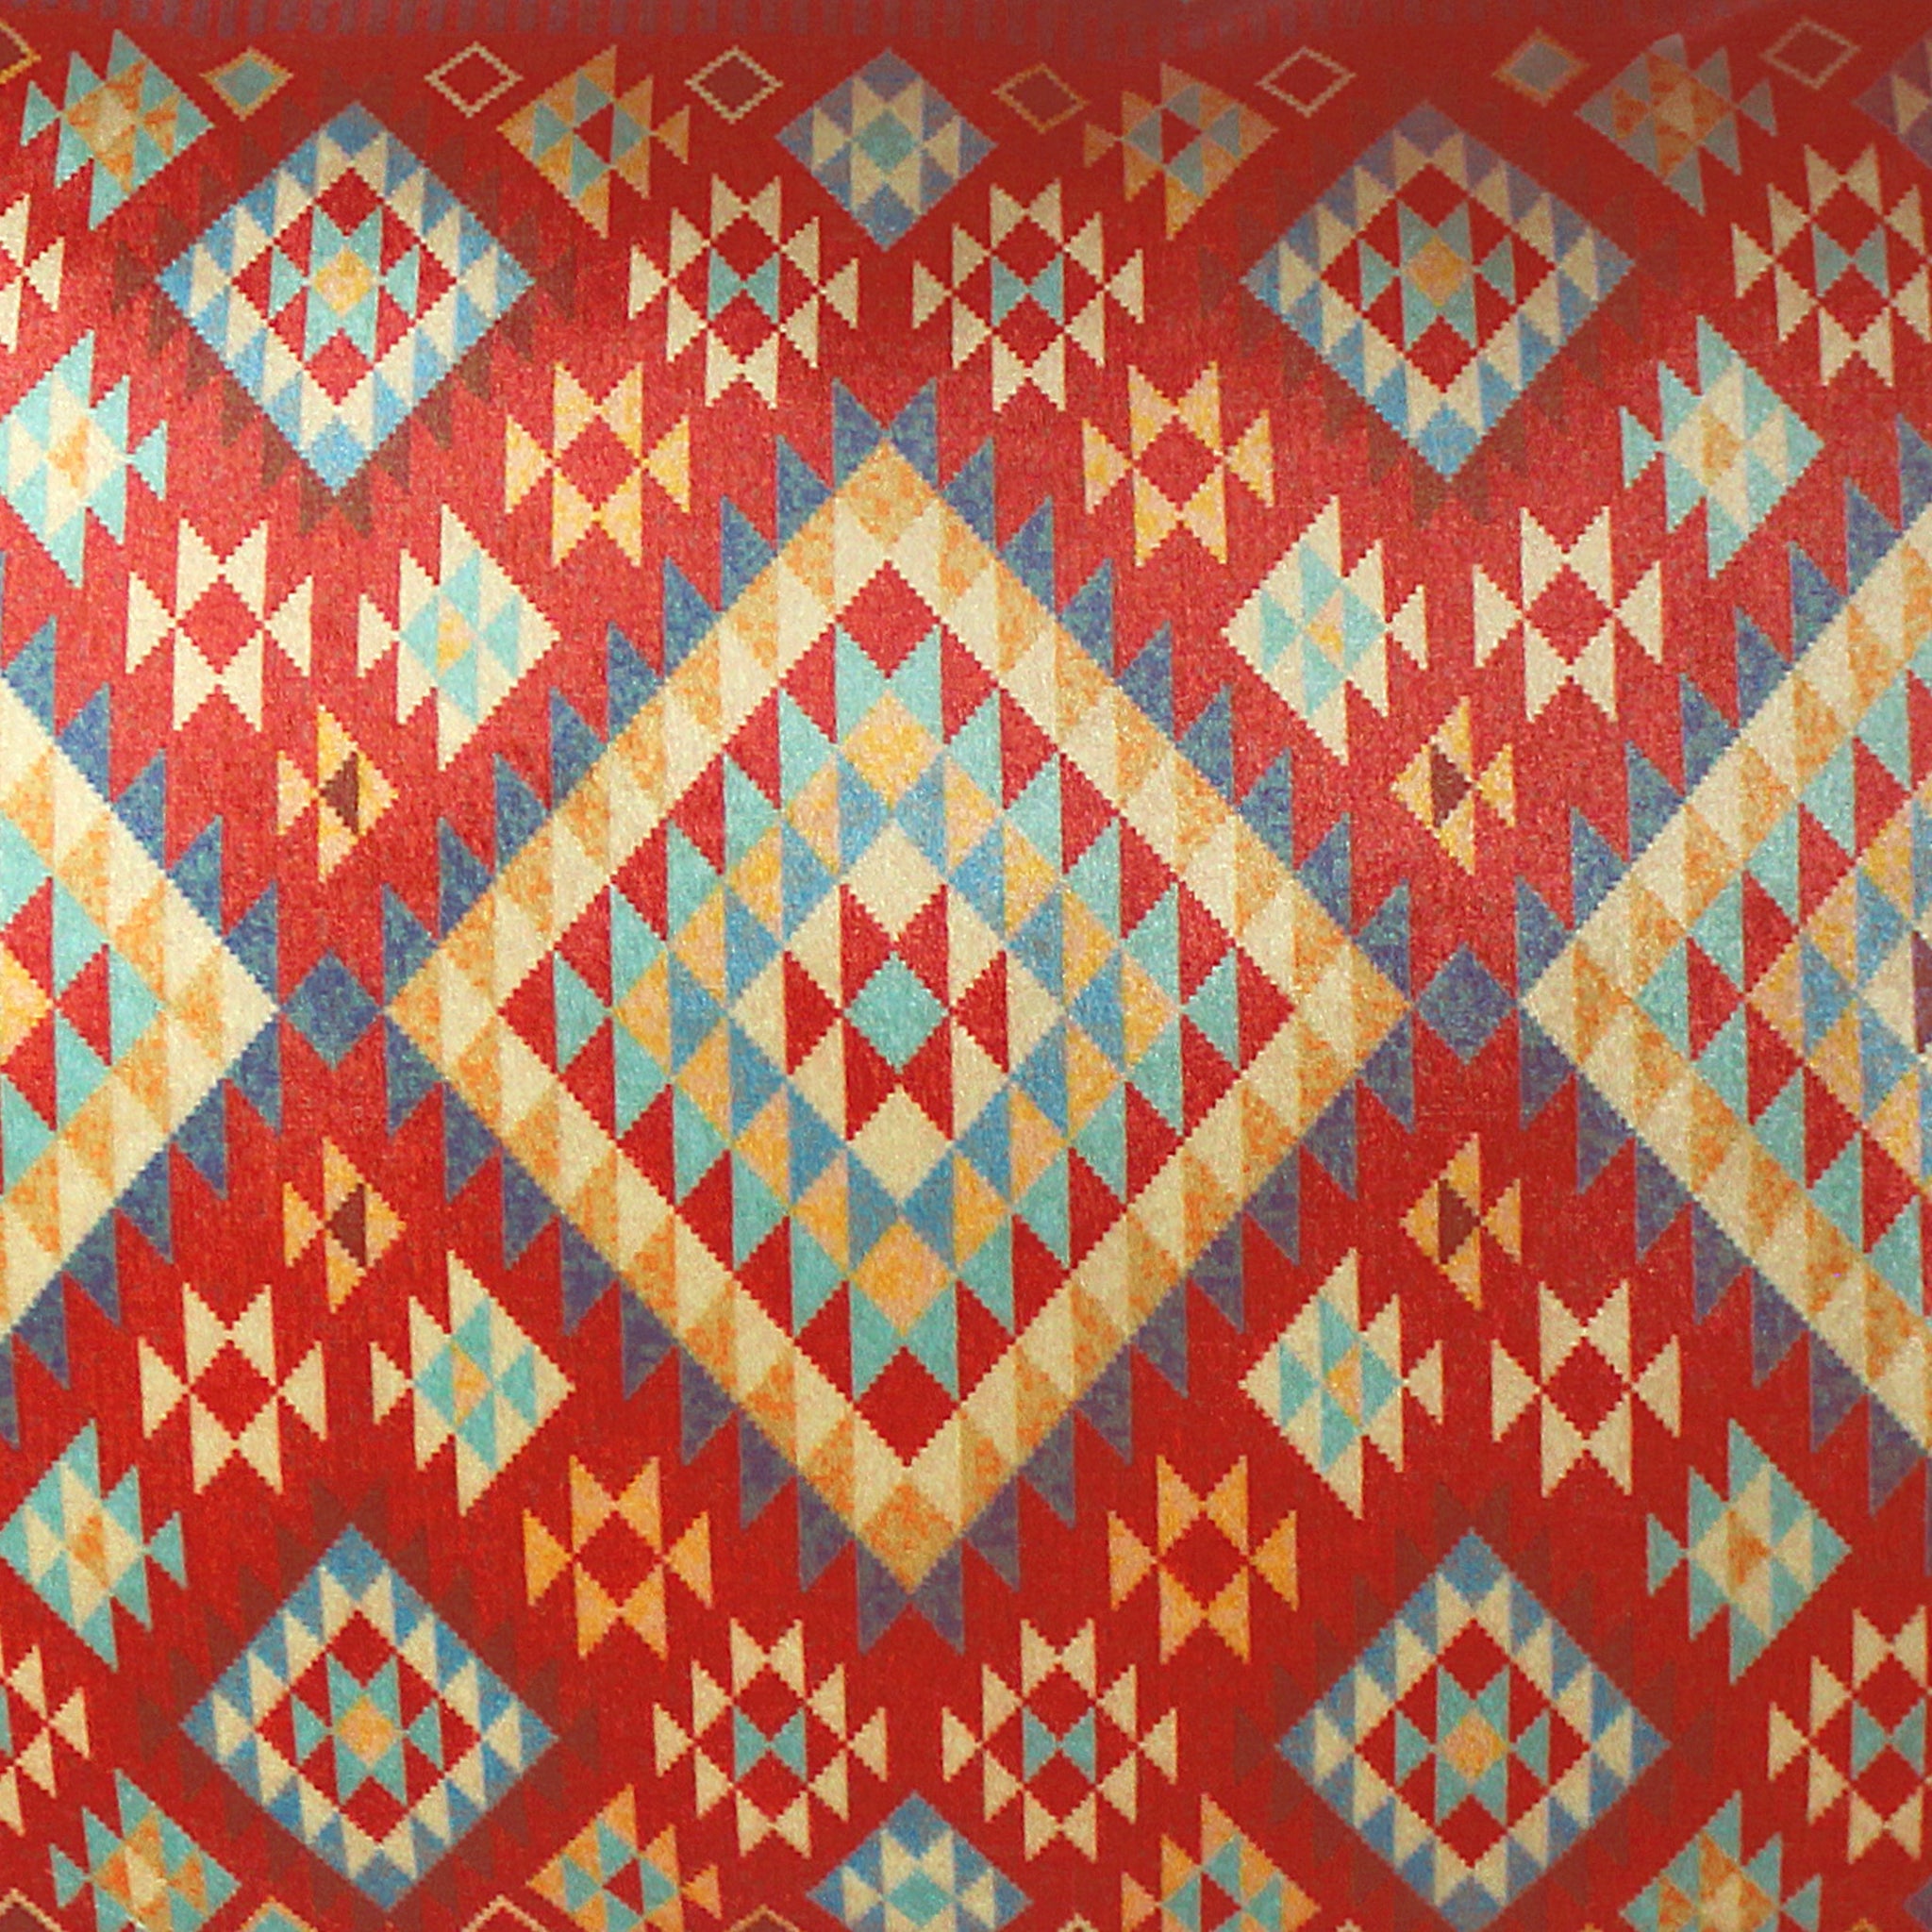 Red Velvet Lumbar Cushion Cover Ethnic Aztec Geometric Decorative Pillowcase Home Decor Throw Pillow for Sofa Chair Living Room 30x50 cm 12x20 In